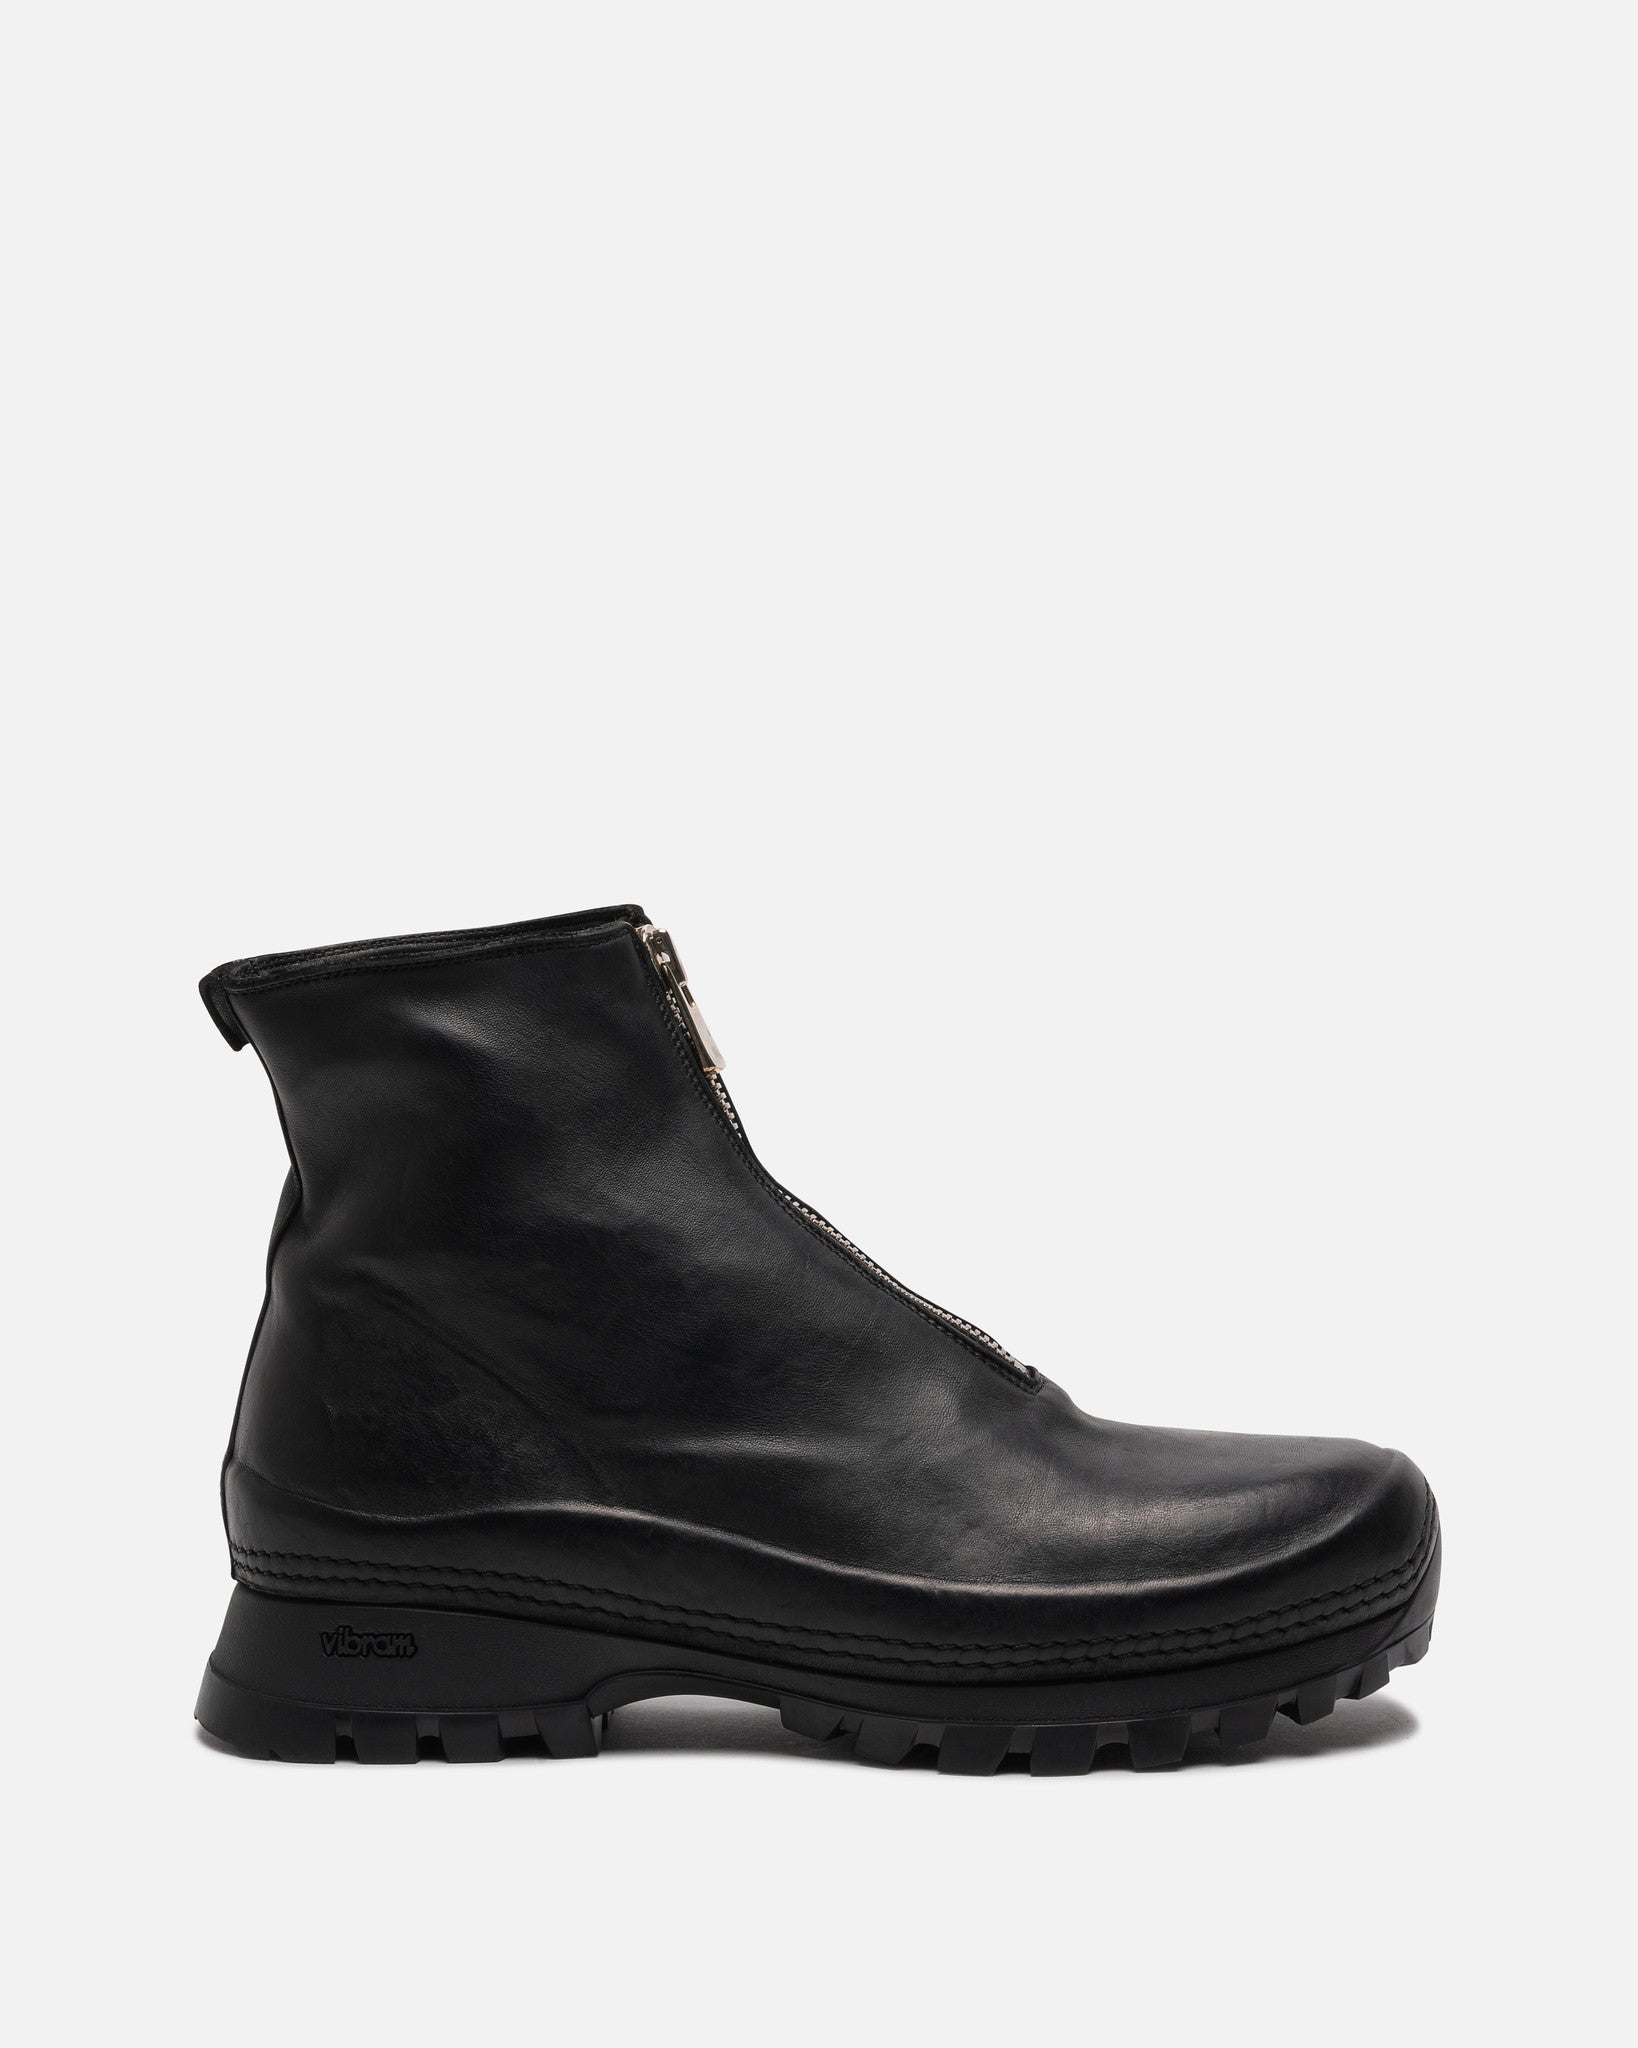 VS01 Full Grain Leather Front Zip Boots in Black